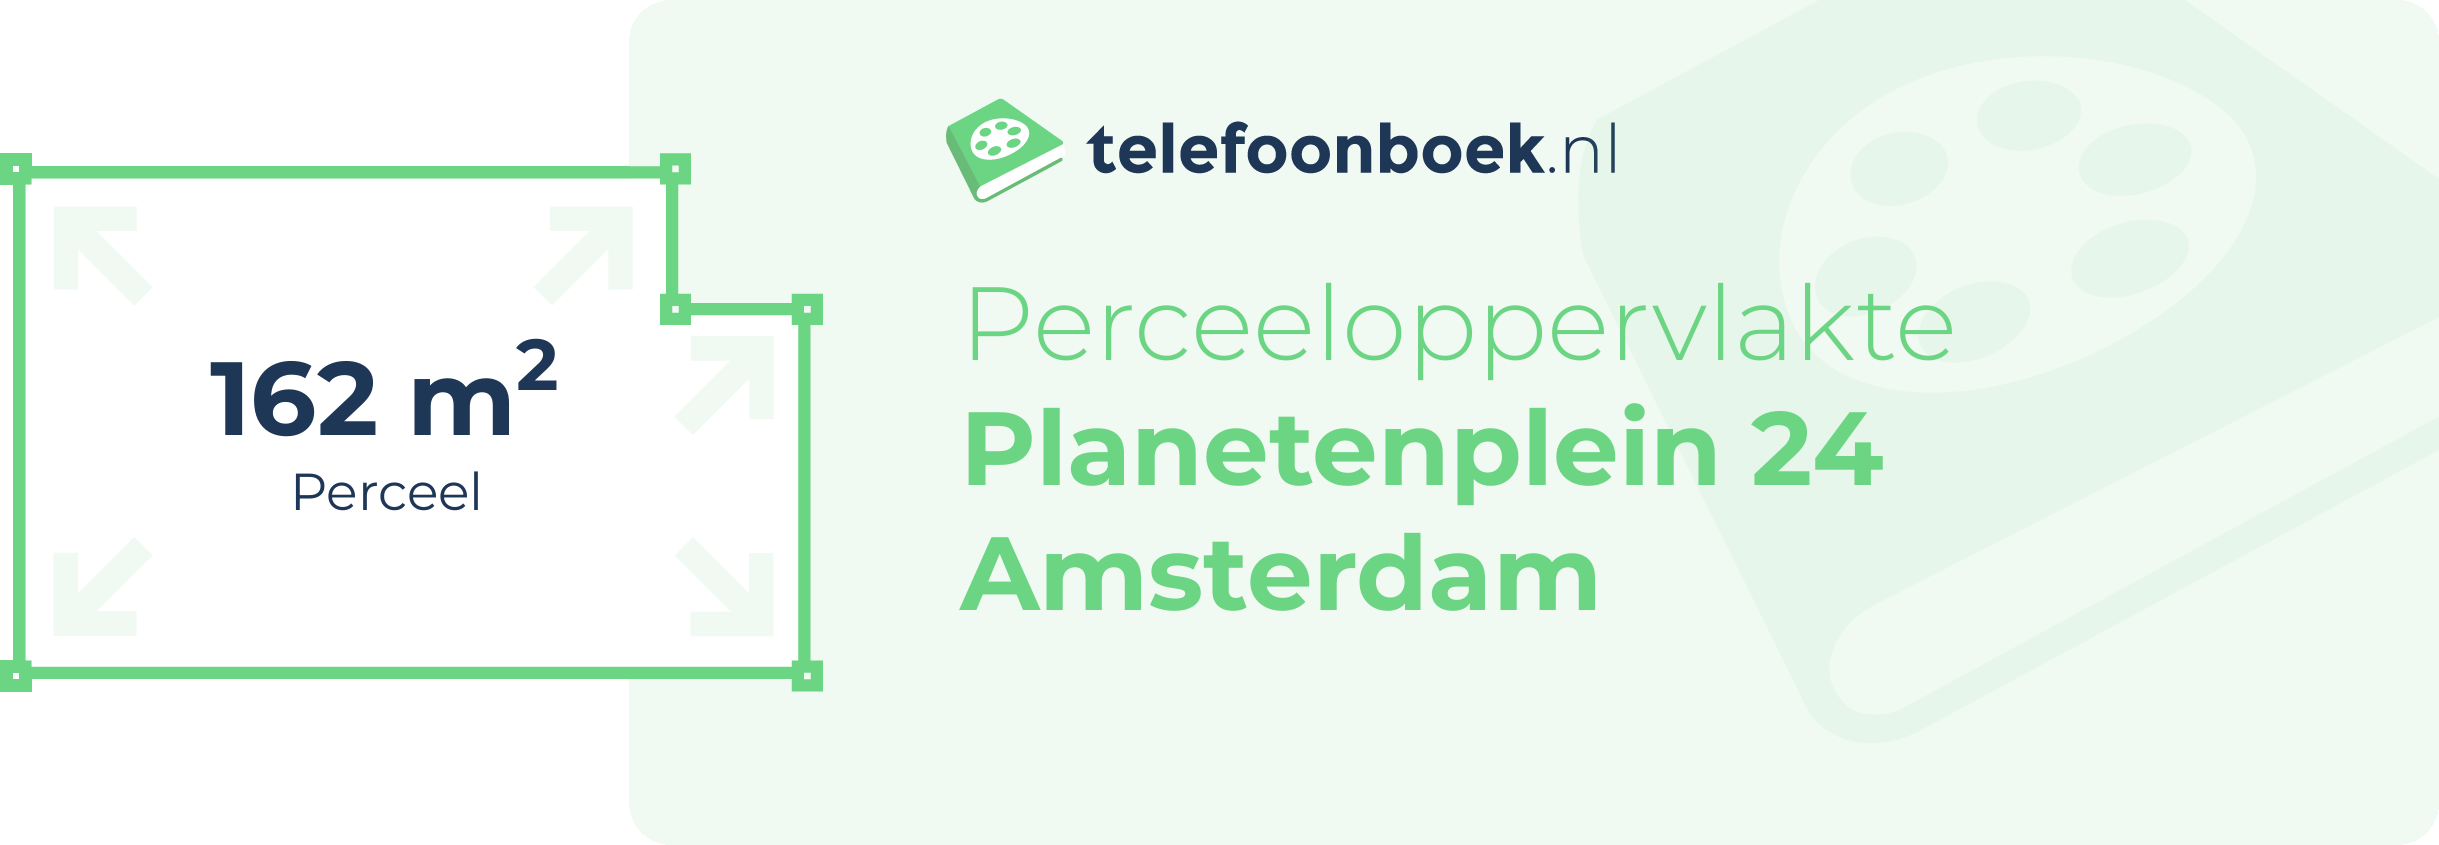 Perceeloppervlakte Planetenplein 24 Amsterdam